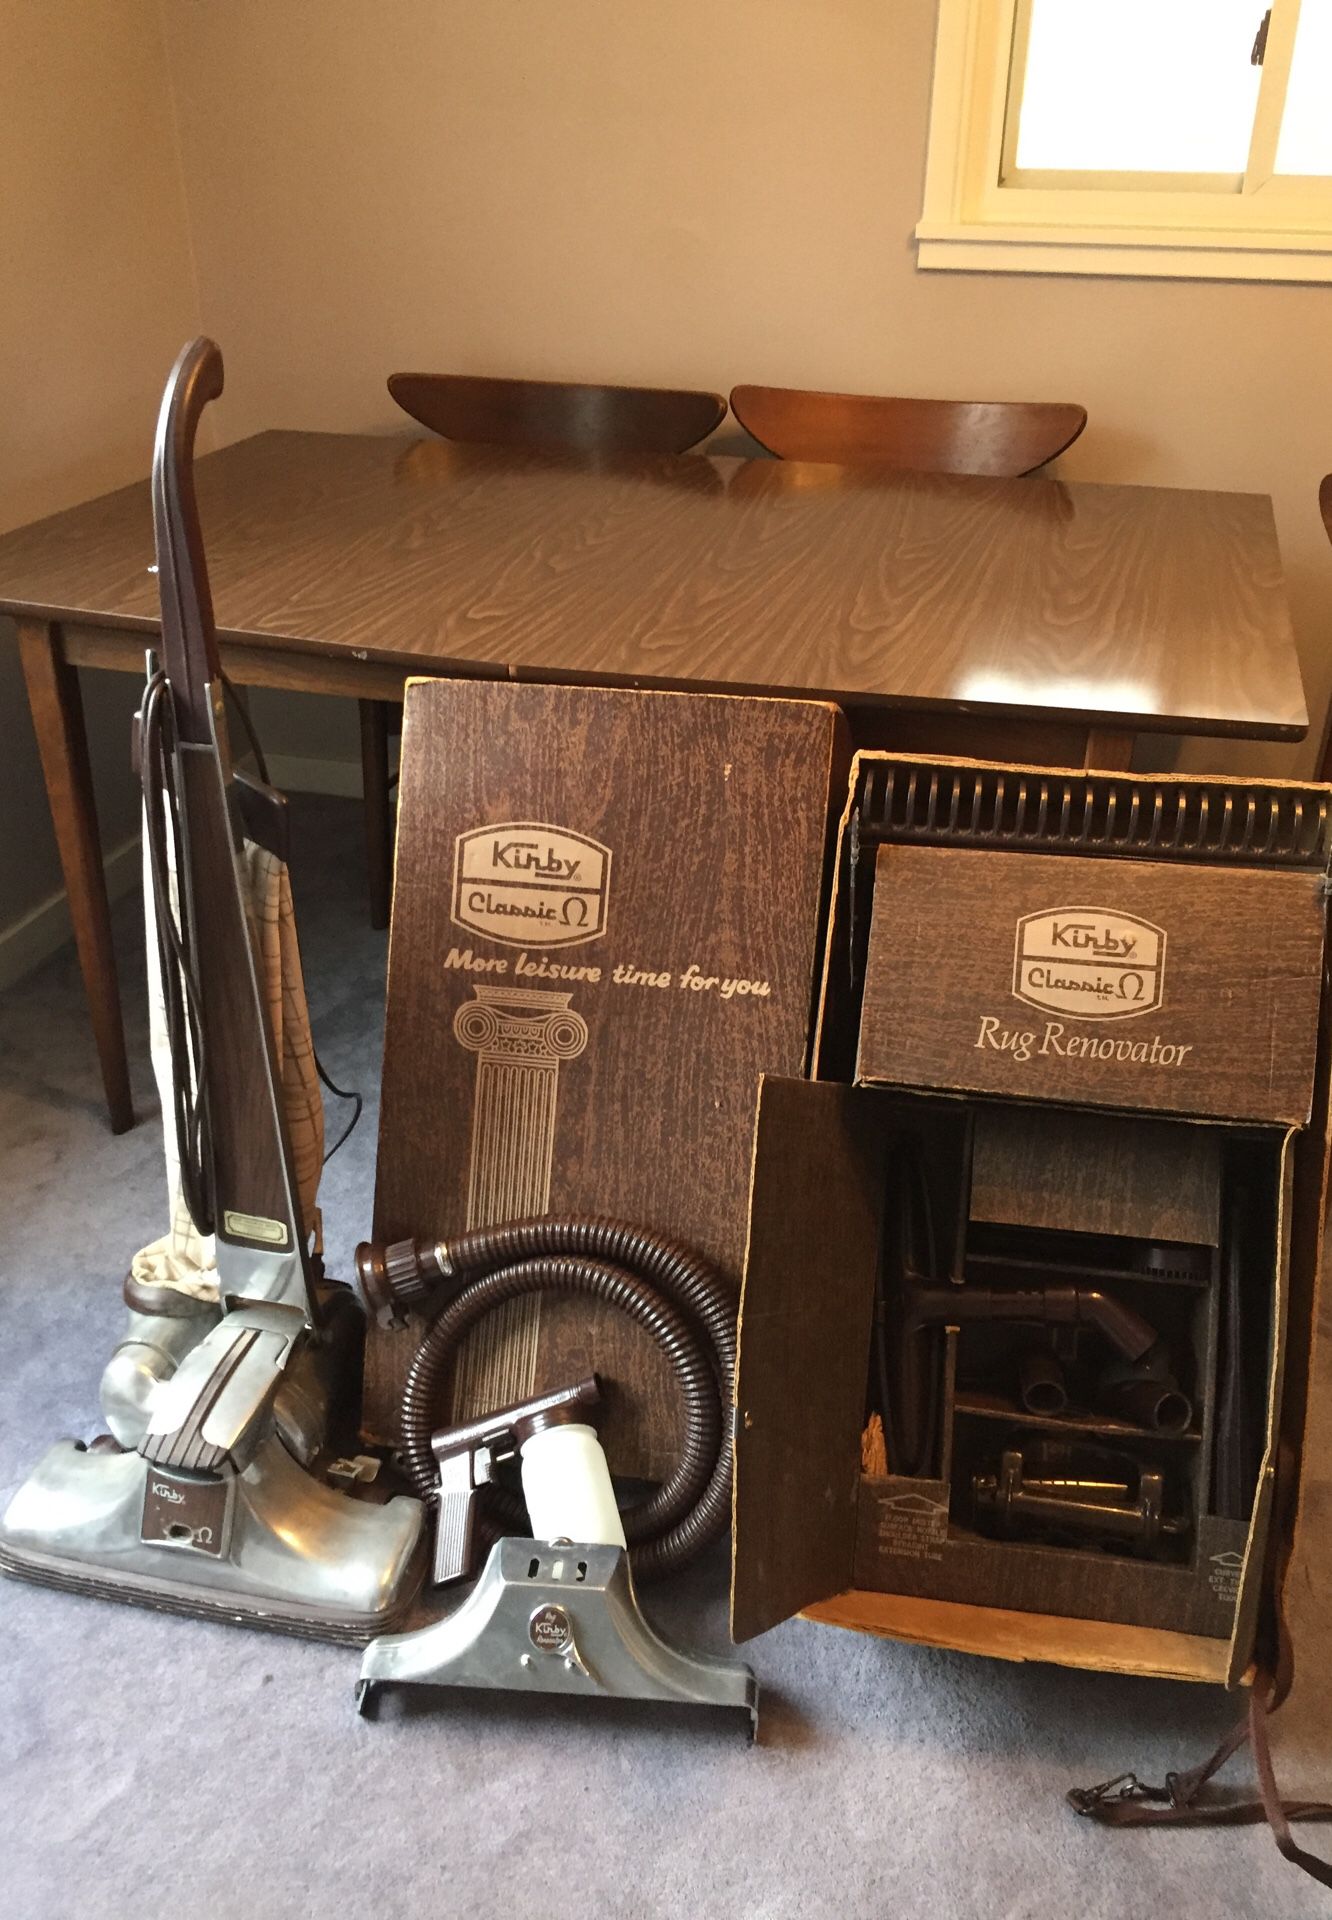 Kirby Classic Vacuum And Rug Renovator Set